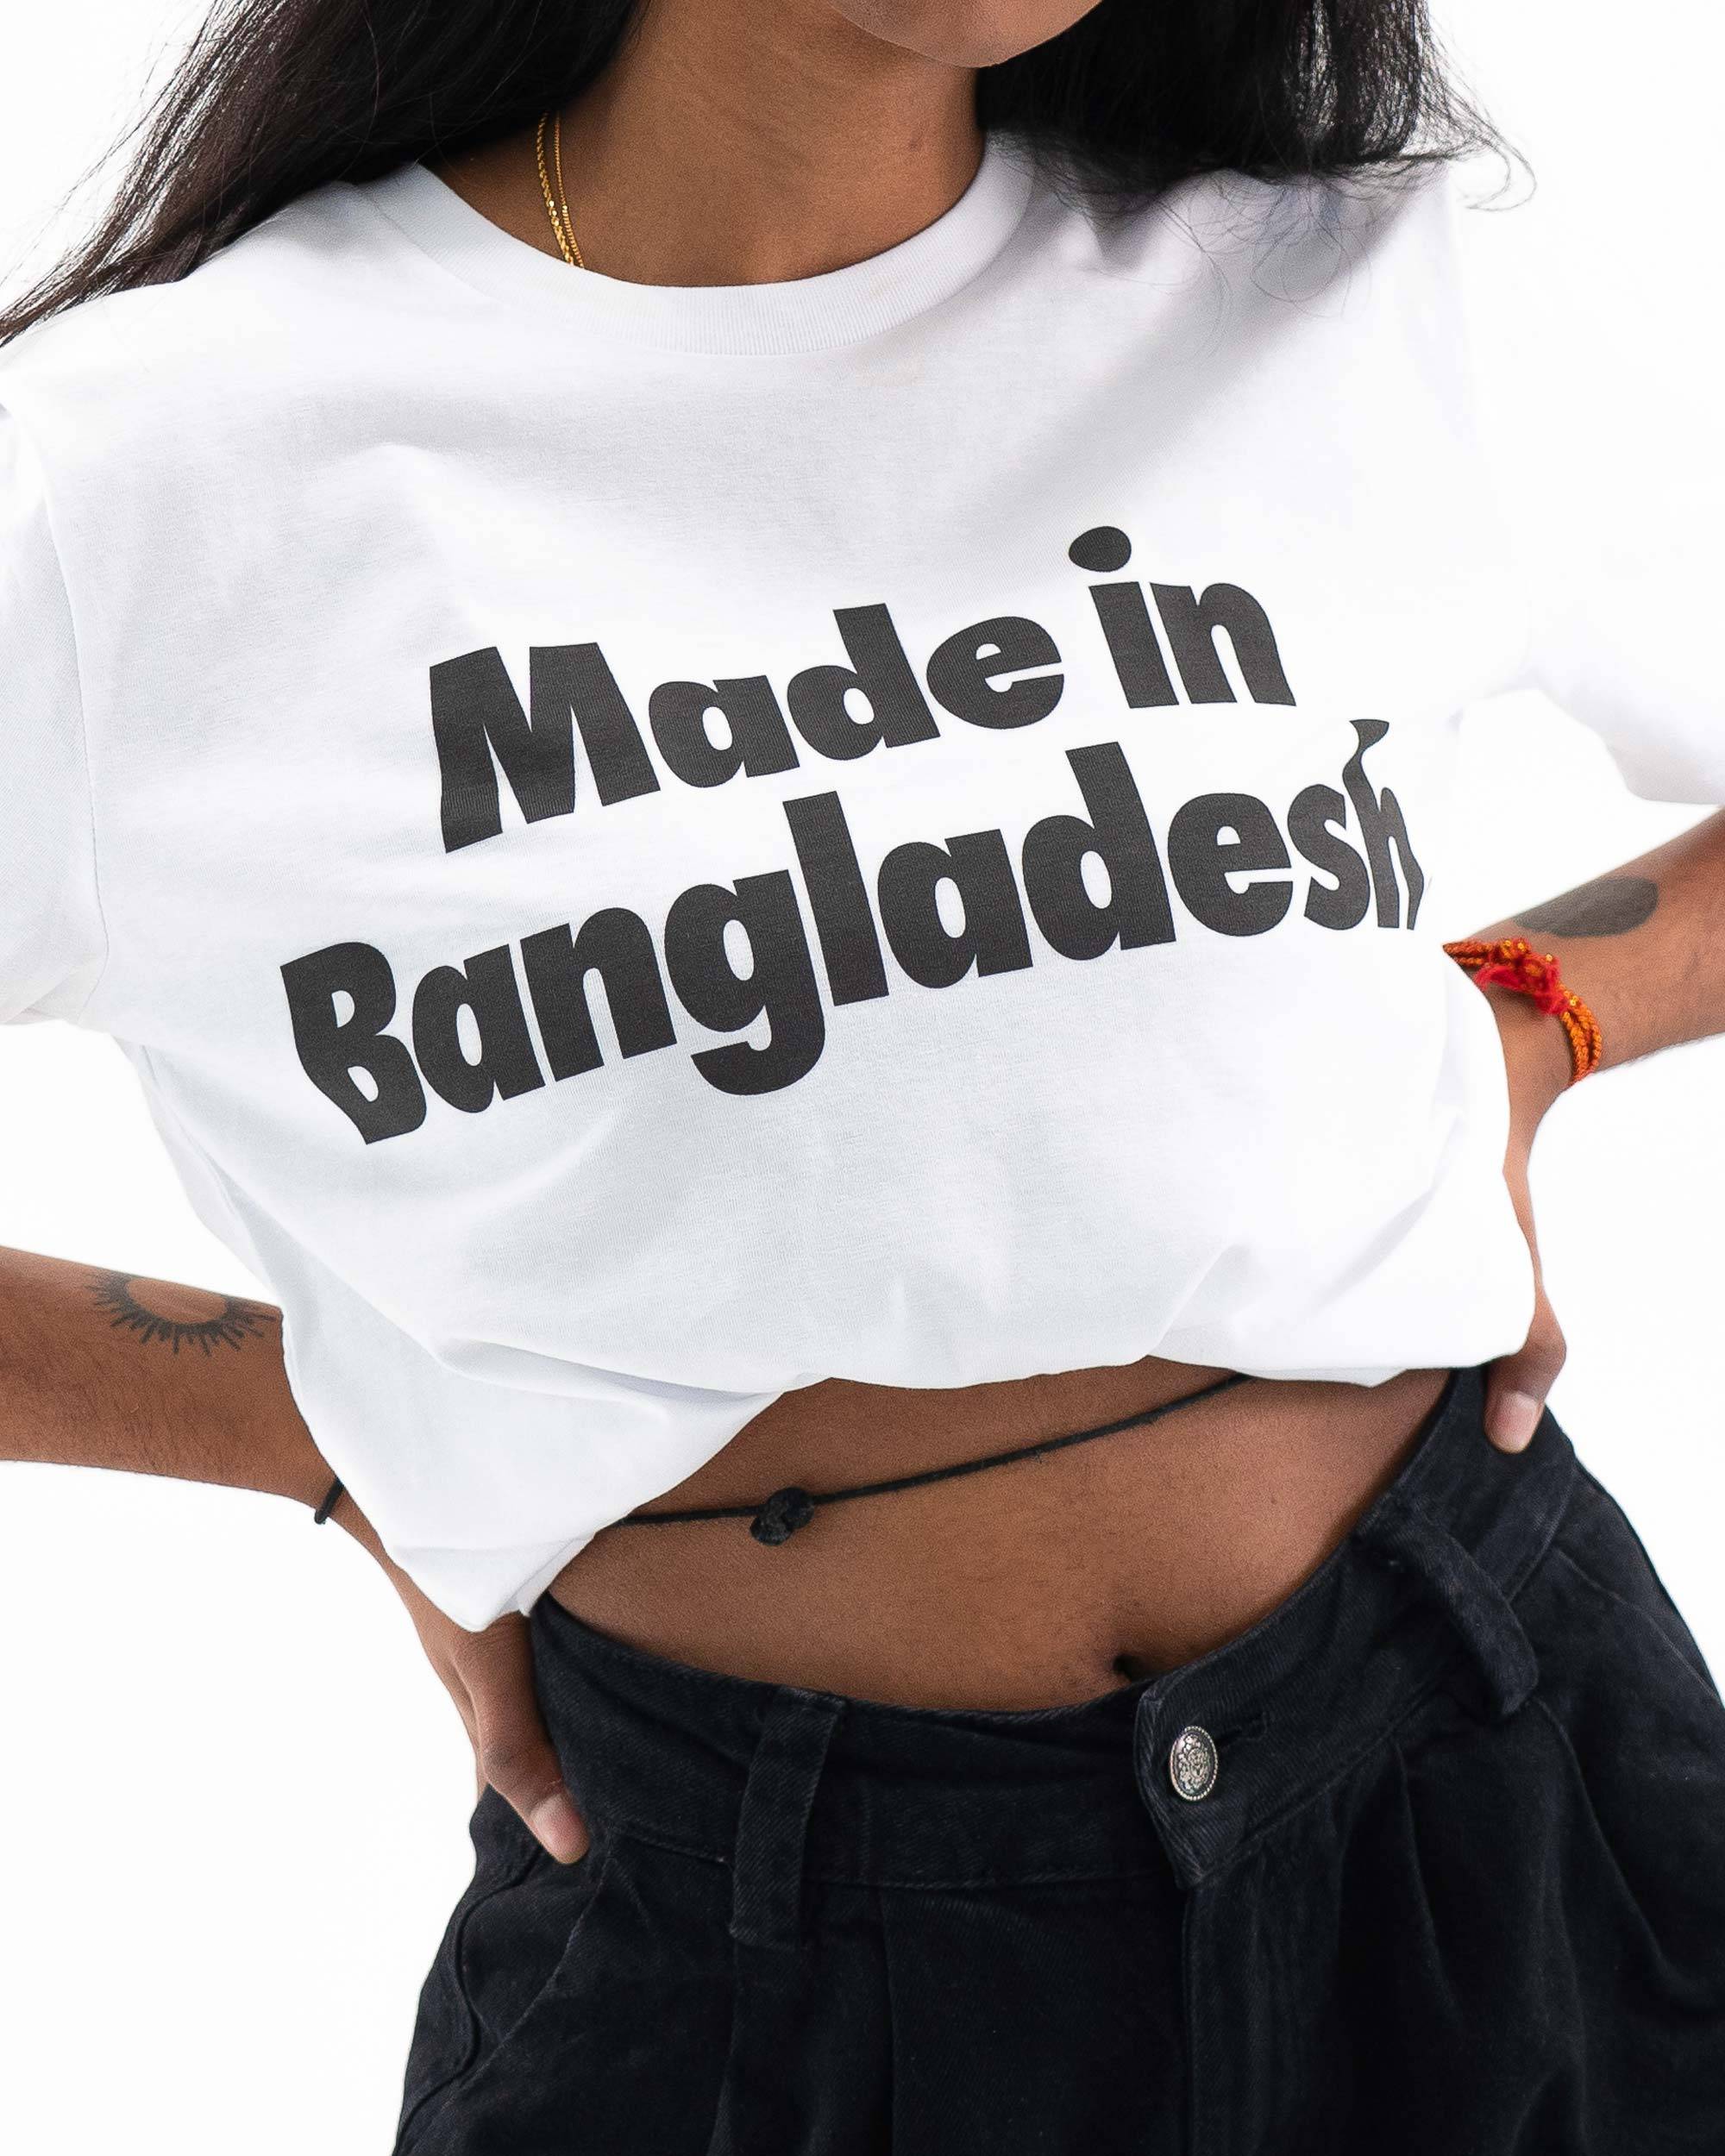 T-shirt Made In Bangladesh Grafitee